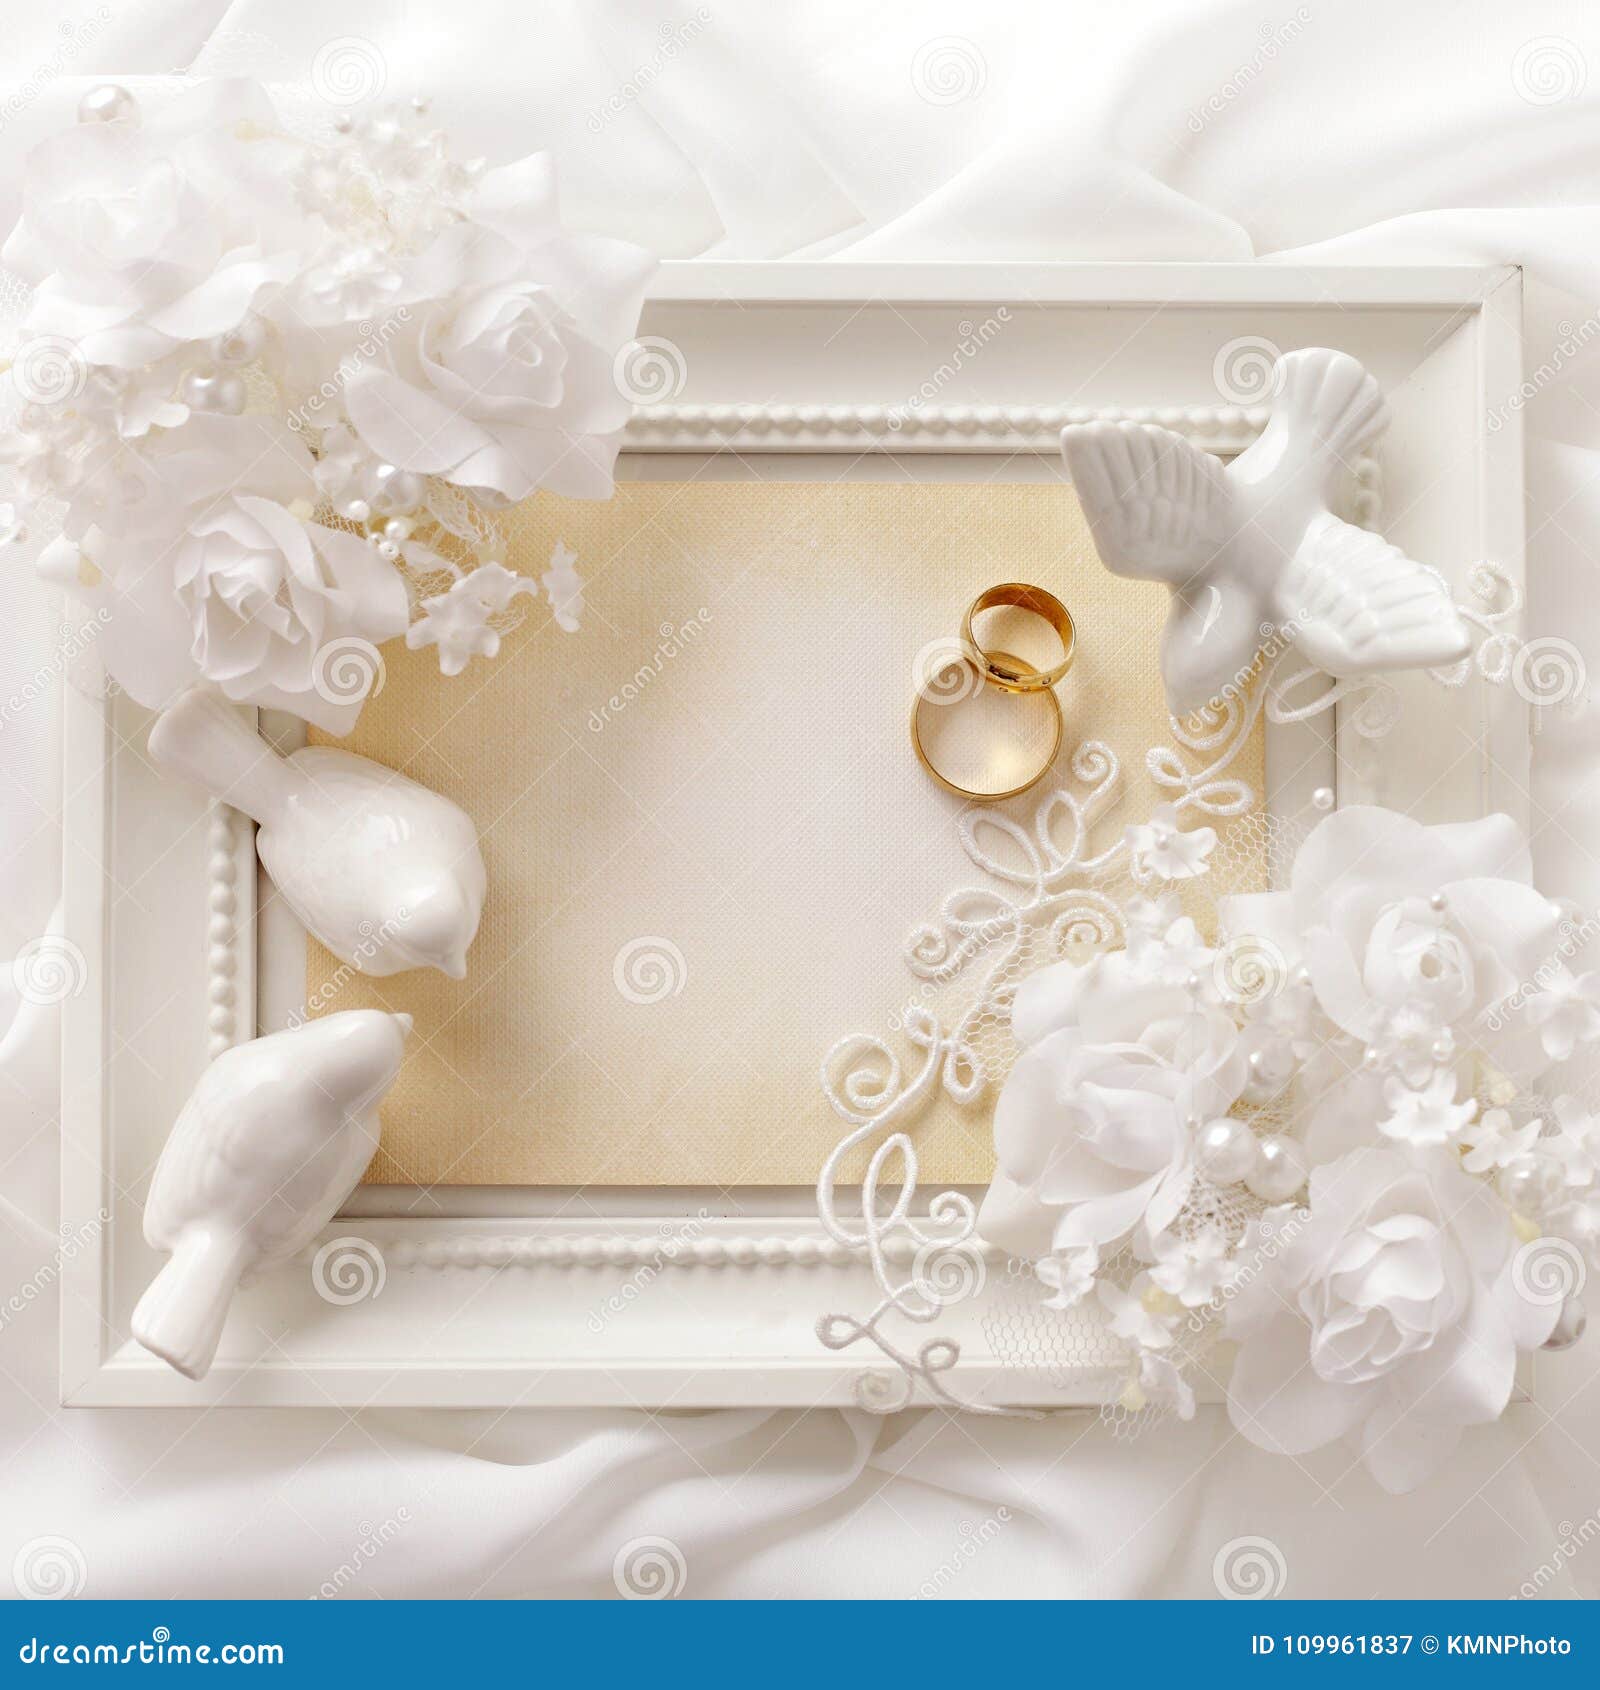 Wedding Background with Empty Photo Frame and Wedding Rings Stock Image -  Image of invitation, background: 109961837